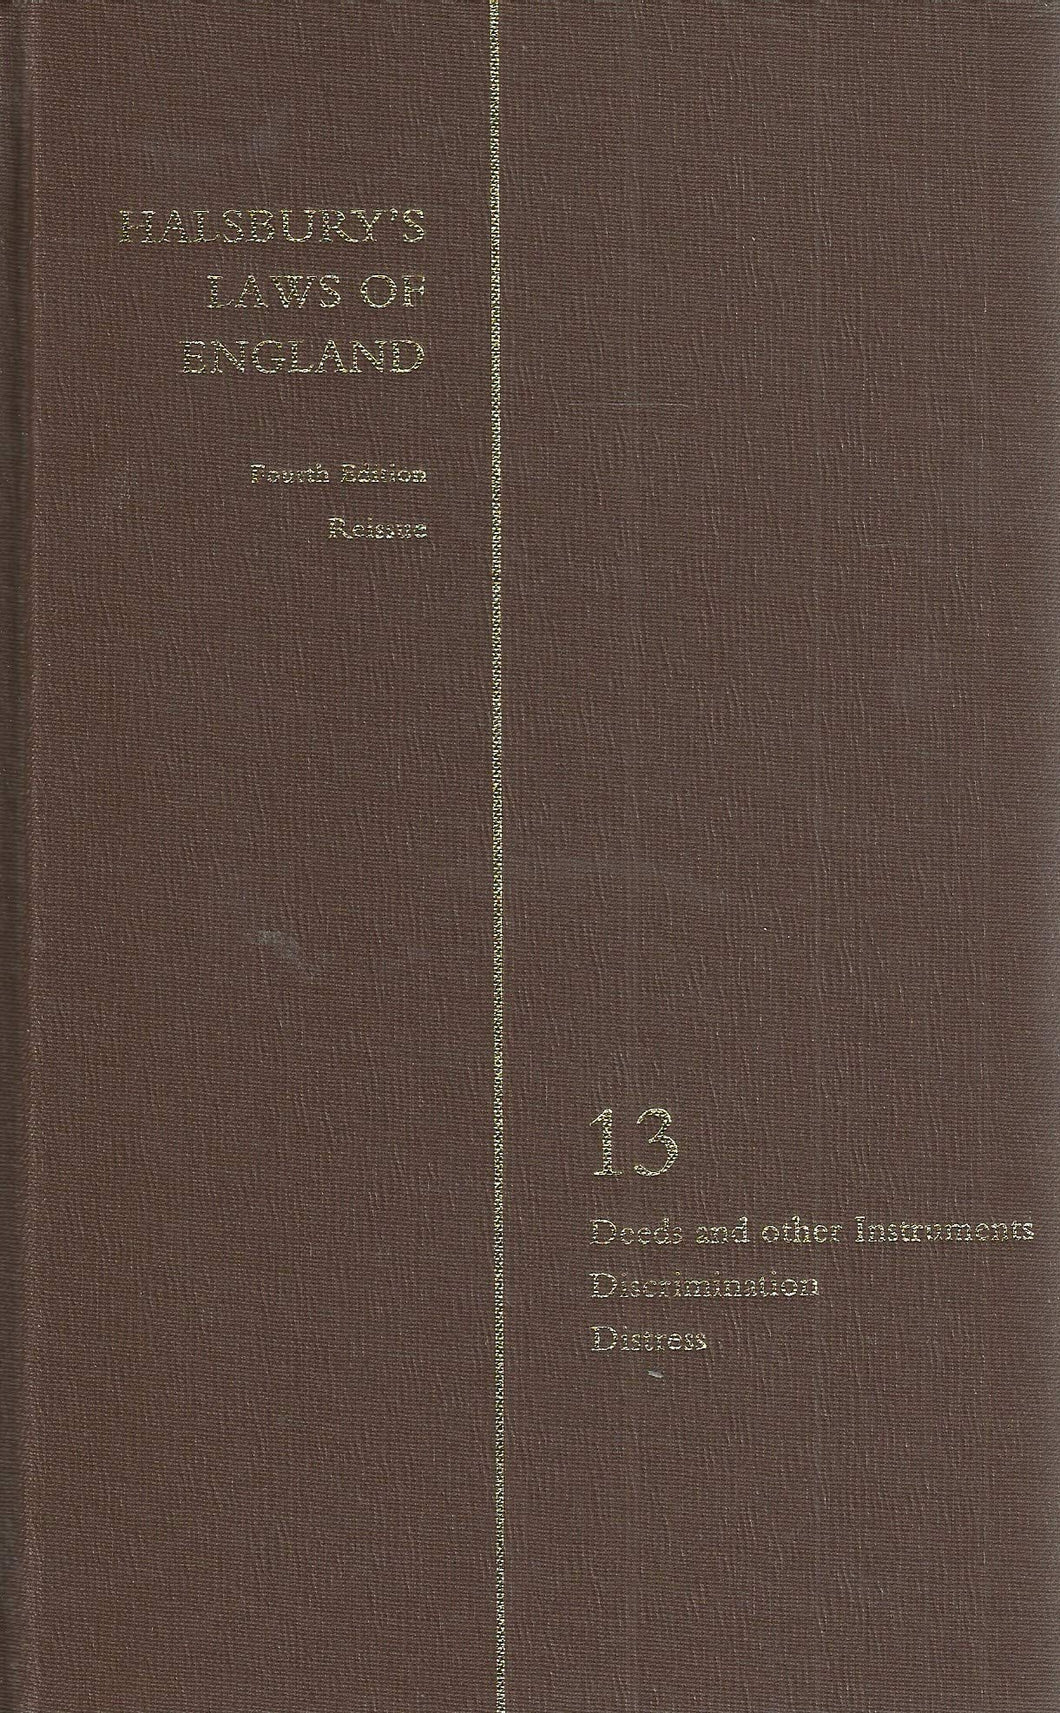 HALSBURY'S STATUTES OF ENGLAND:  Deeds and other Instruments, Discrimination, Distress.